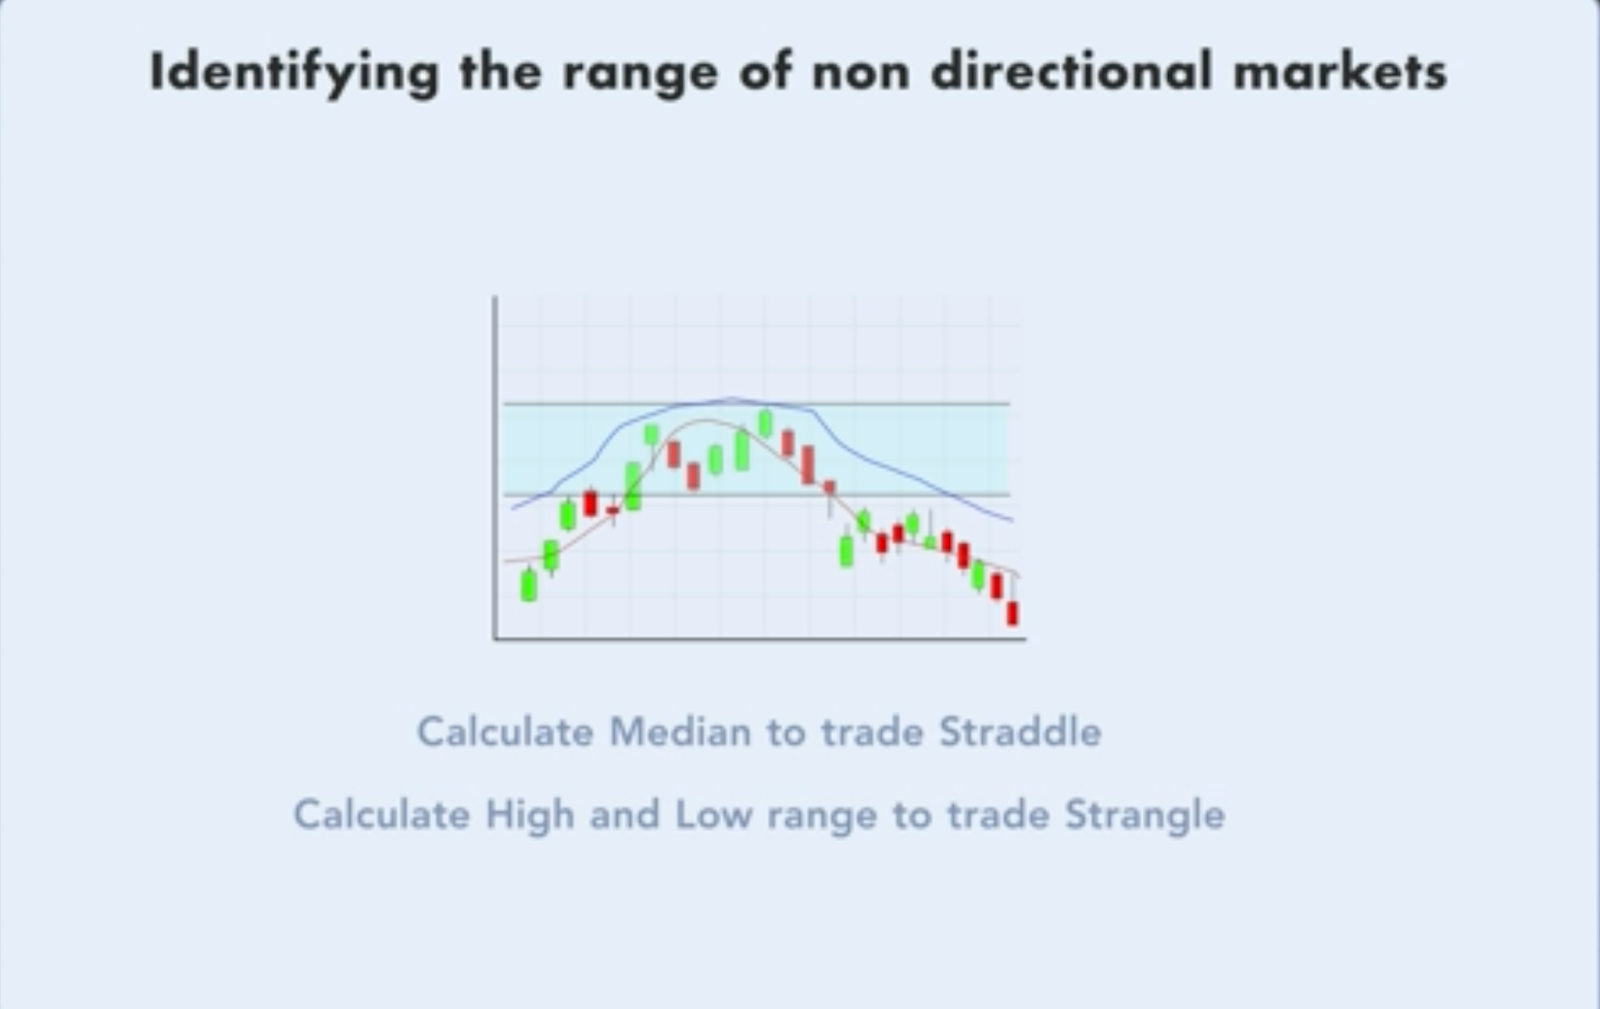 Range of non-directional markets